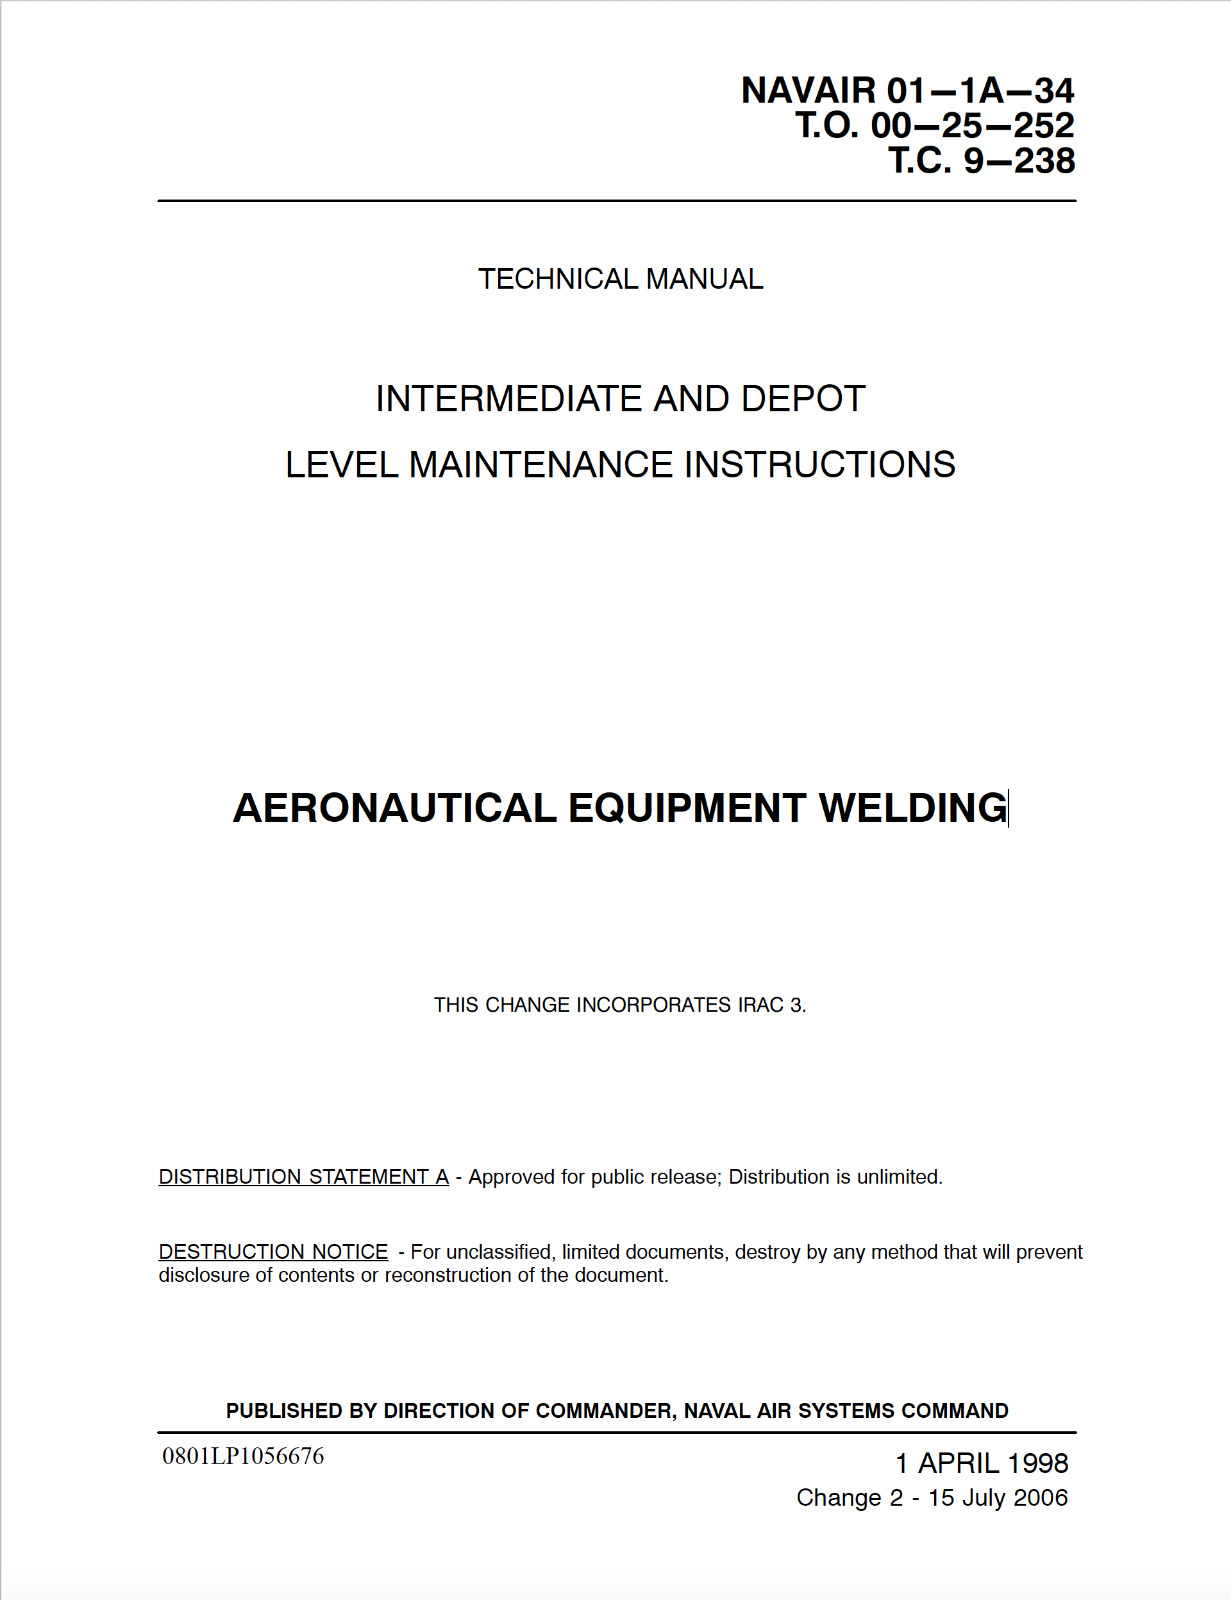 278 Page AERONAUTICAL EQUIPMENT WELDING NAVAIR Technical Manual On CD